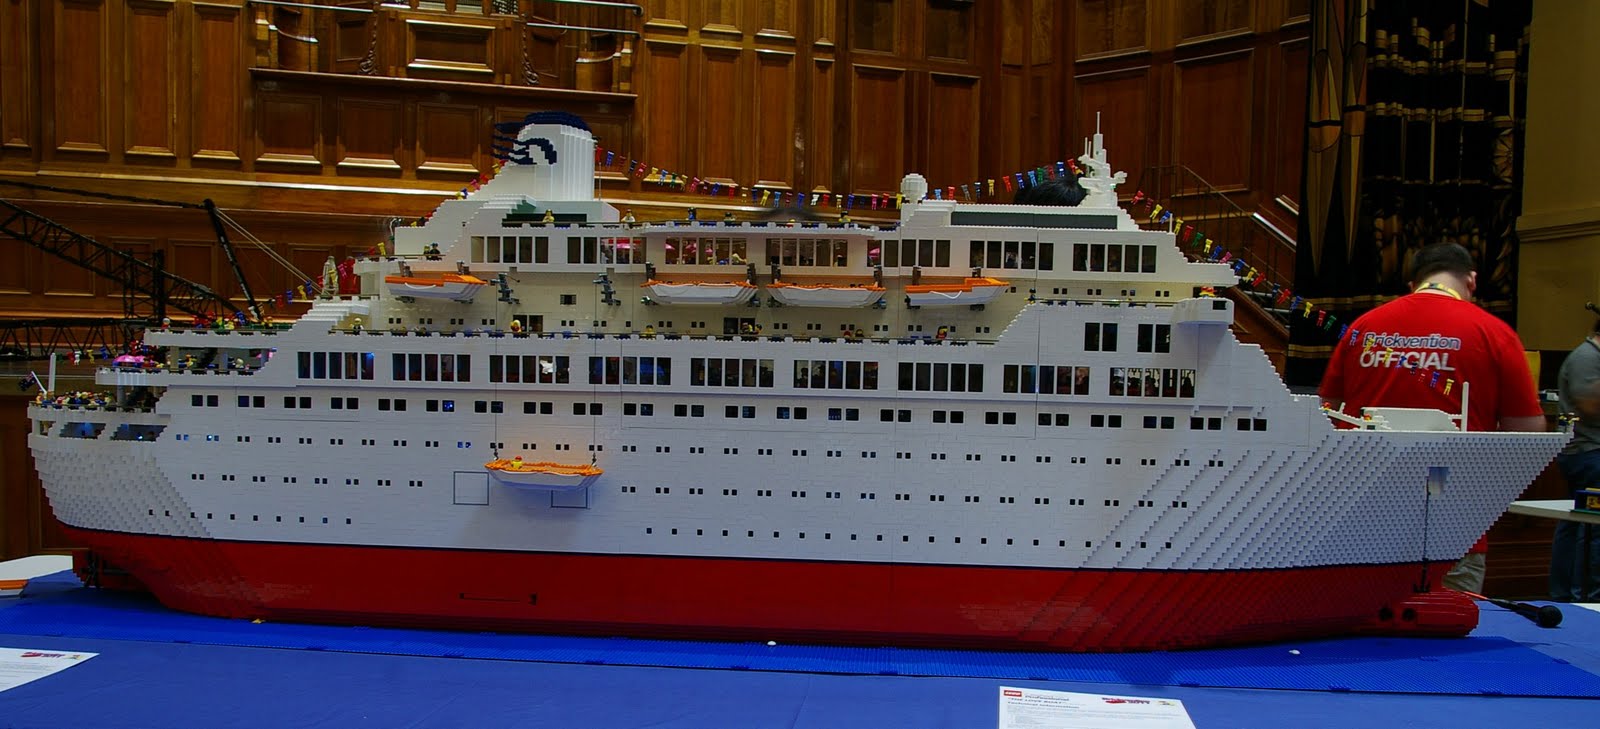 Traveloscopy Travelblog: Struth! Lego Boat a Labour of Love